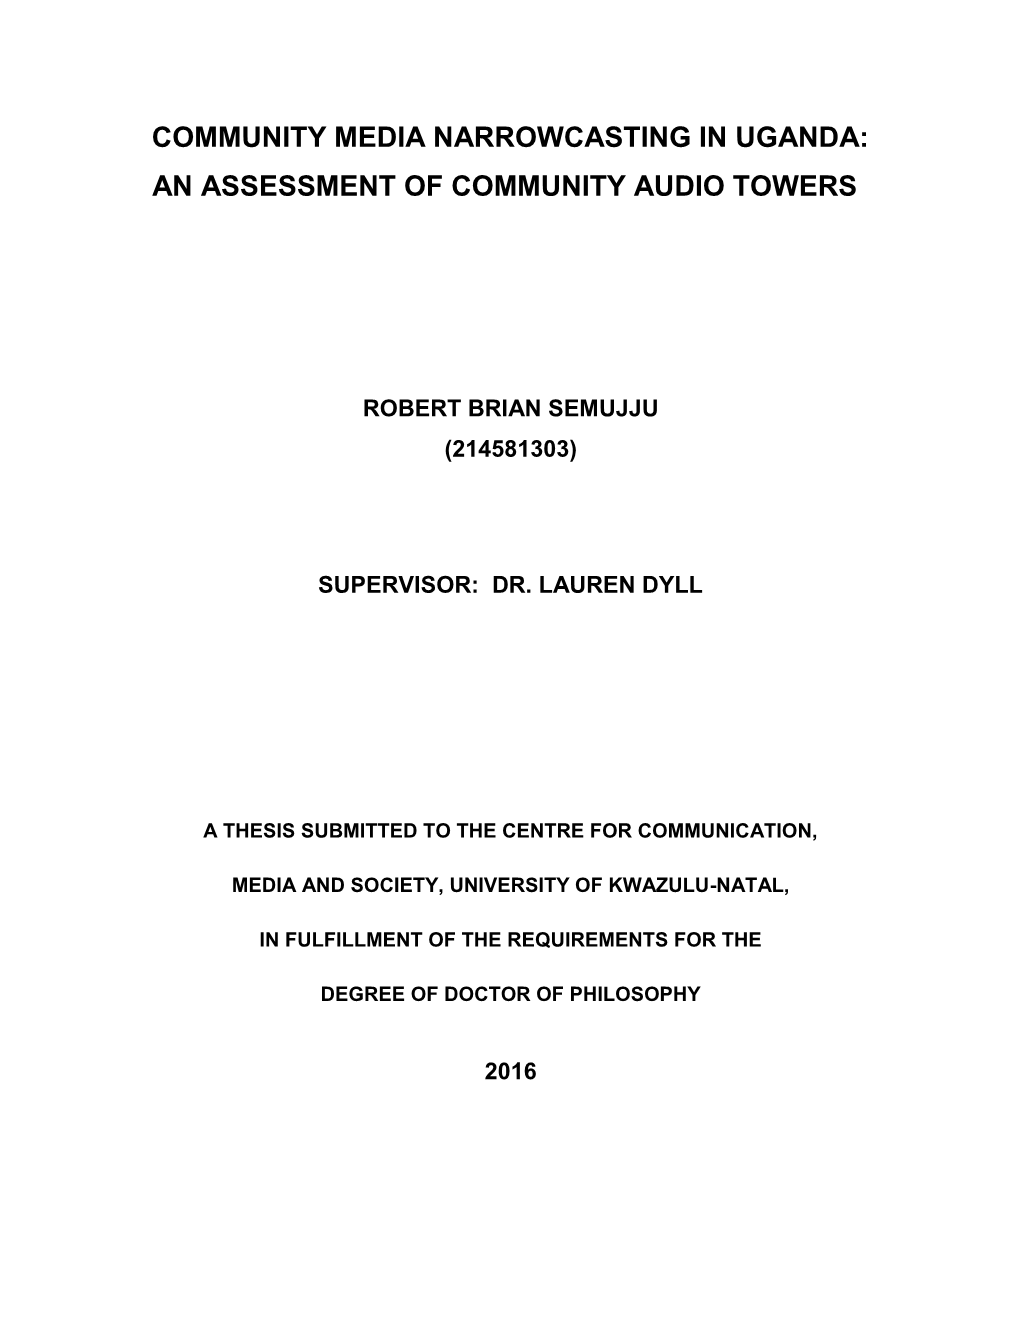 Community Media Narrowcasting in Uganda: an Assessment of Community Audio Towers